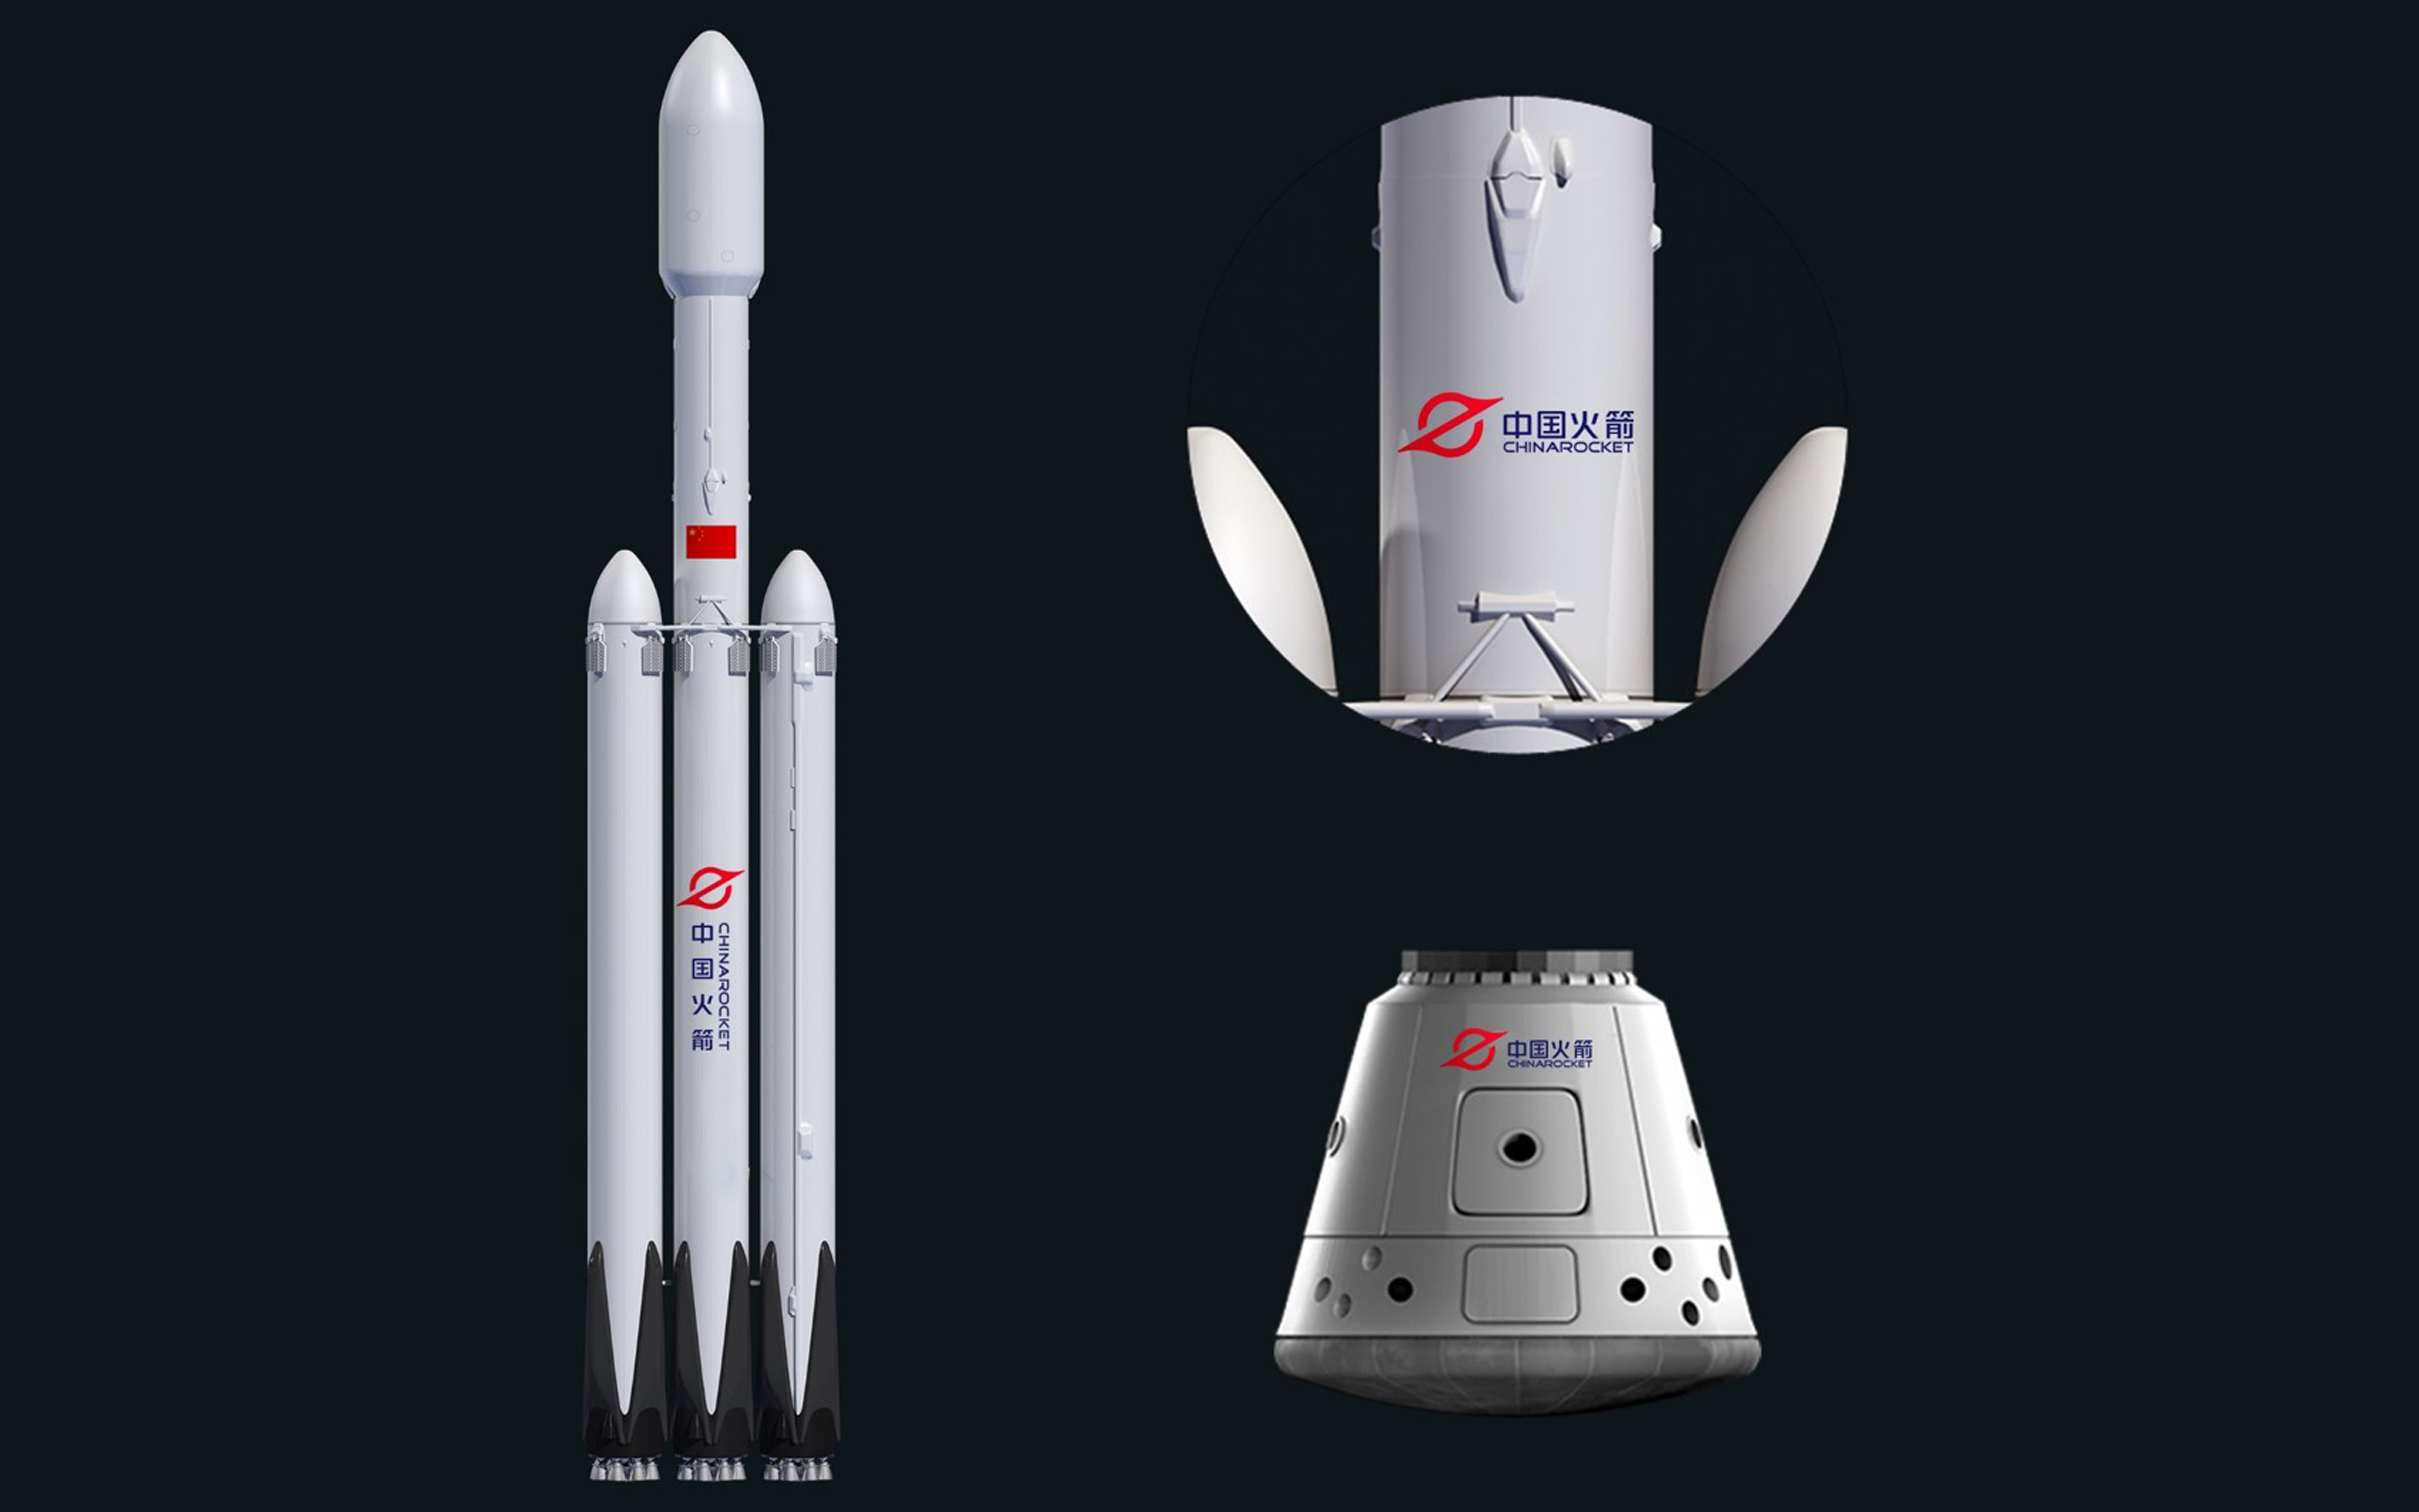 China Rocket Good Design